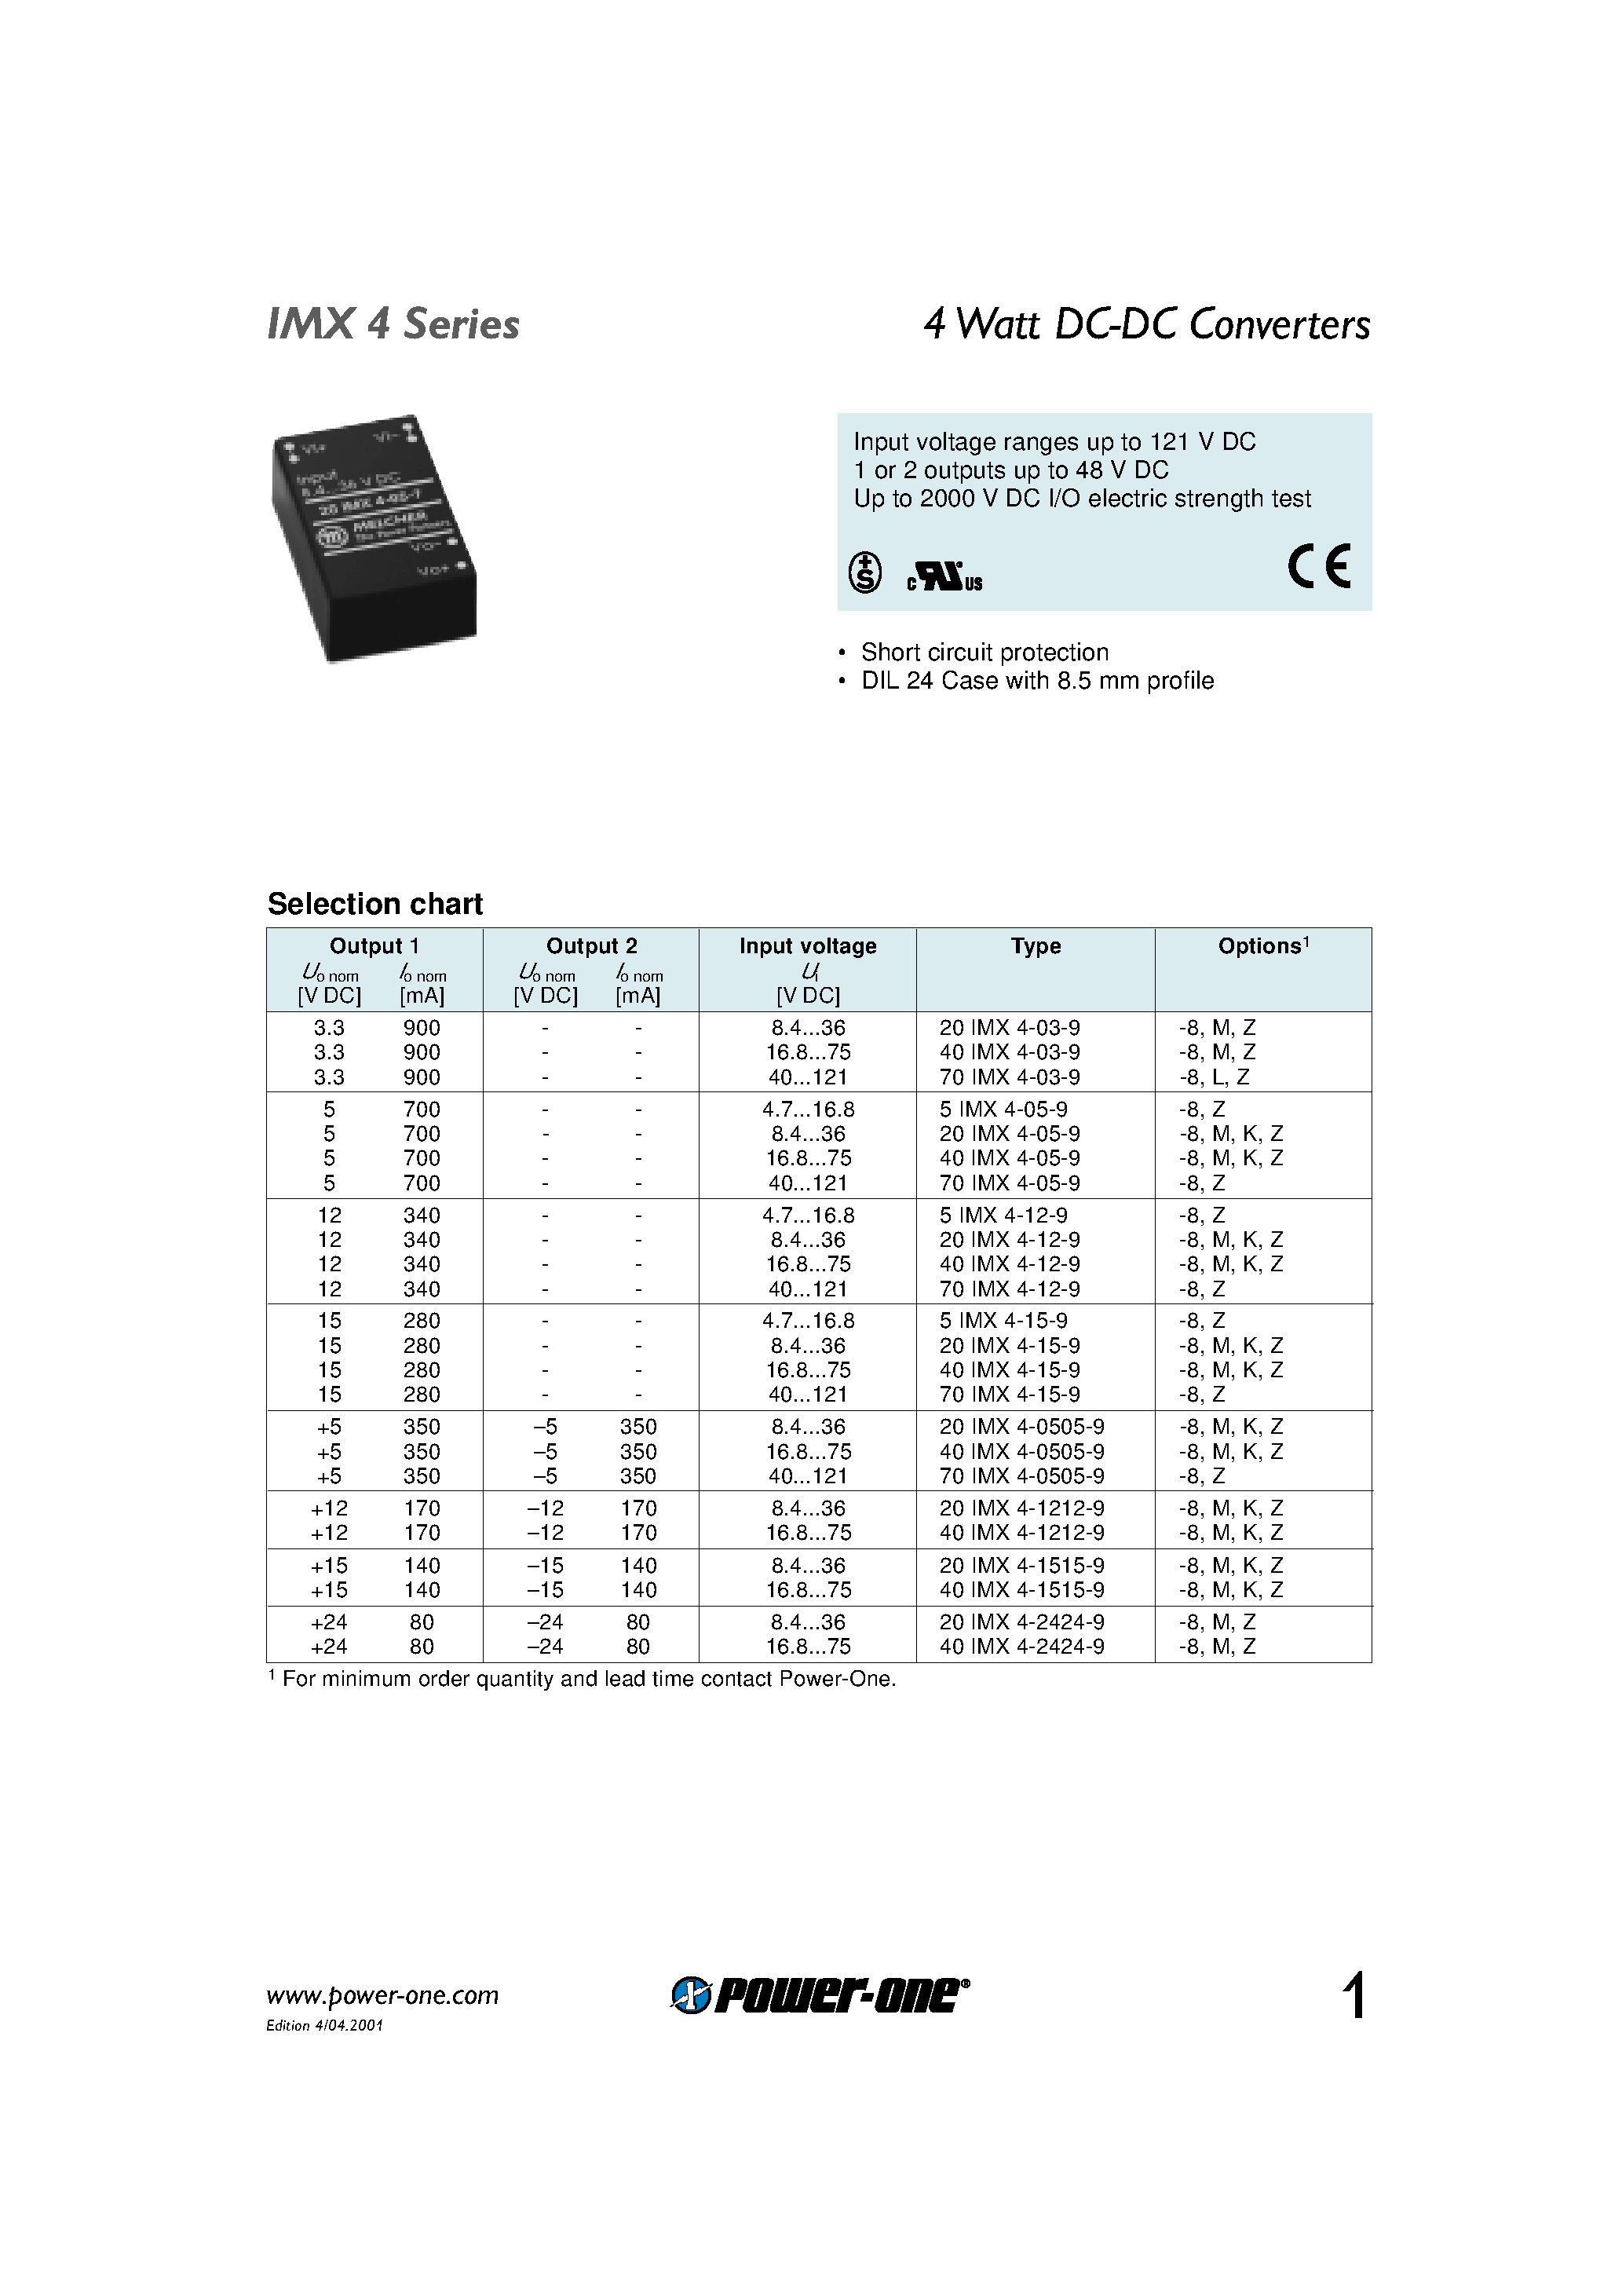 Даташит 40IMX4-15-9 - 4 Watt DC-DC Converters страница 1